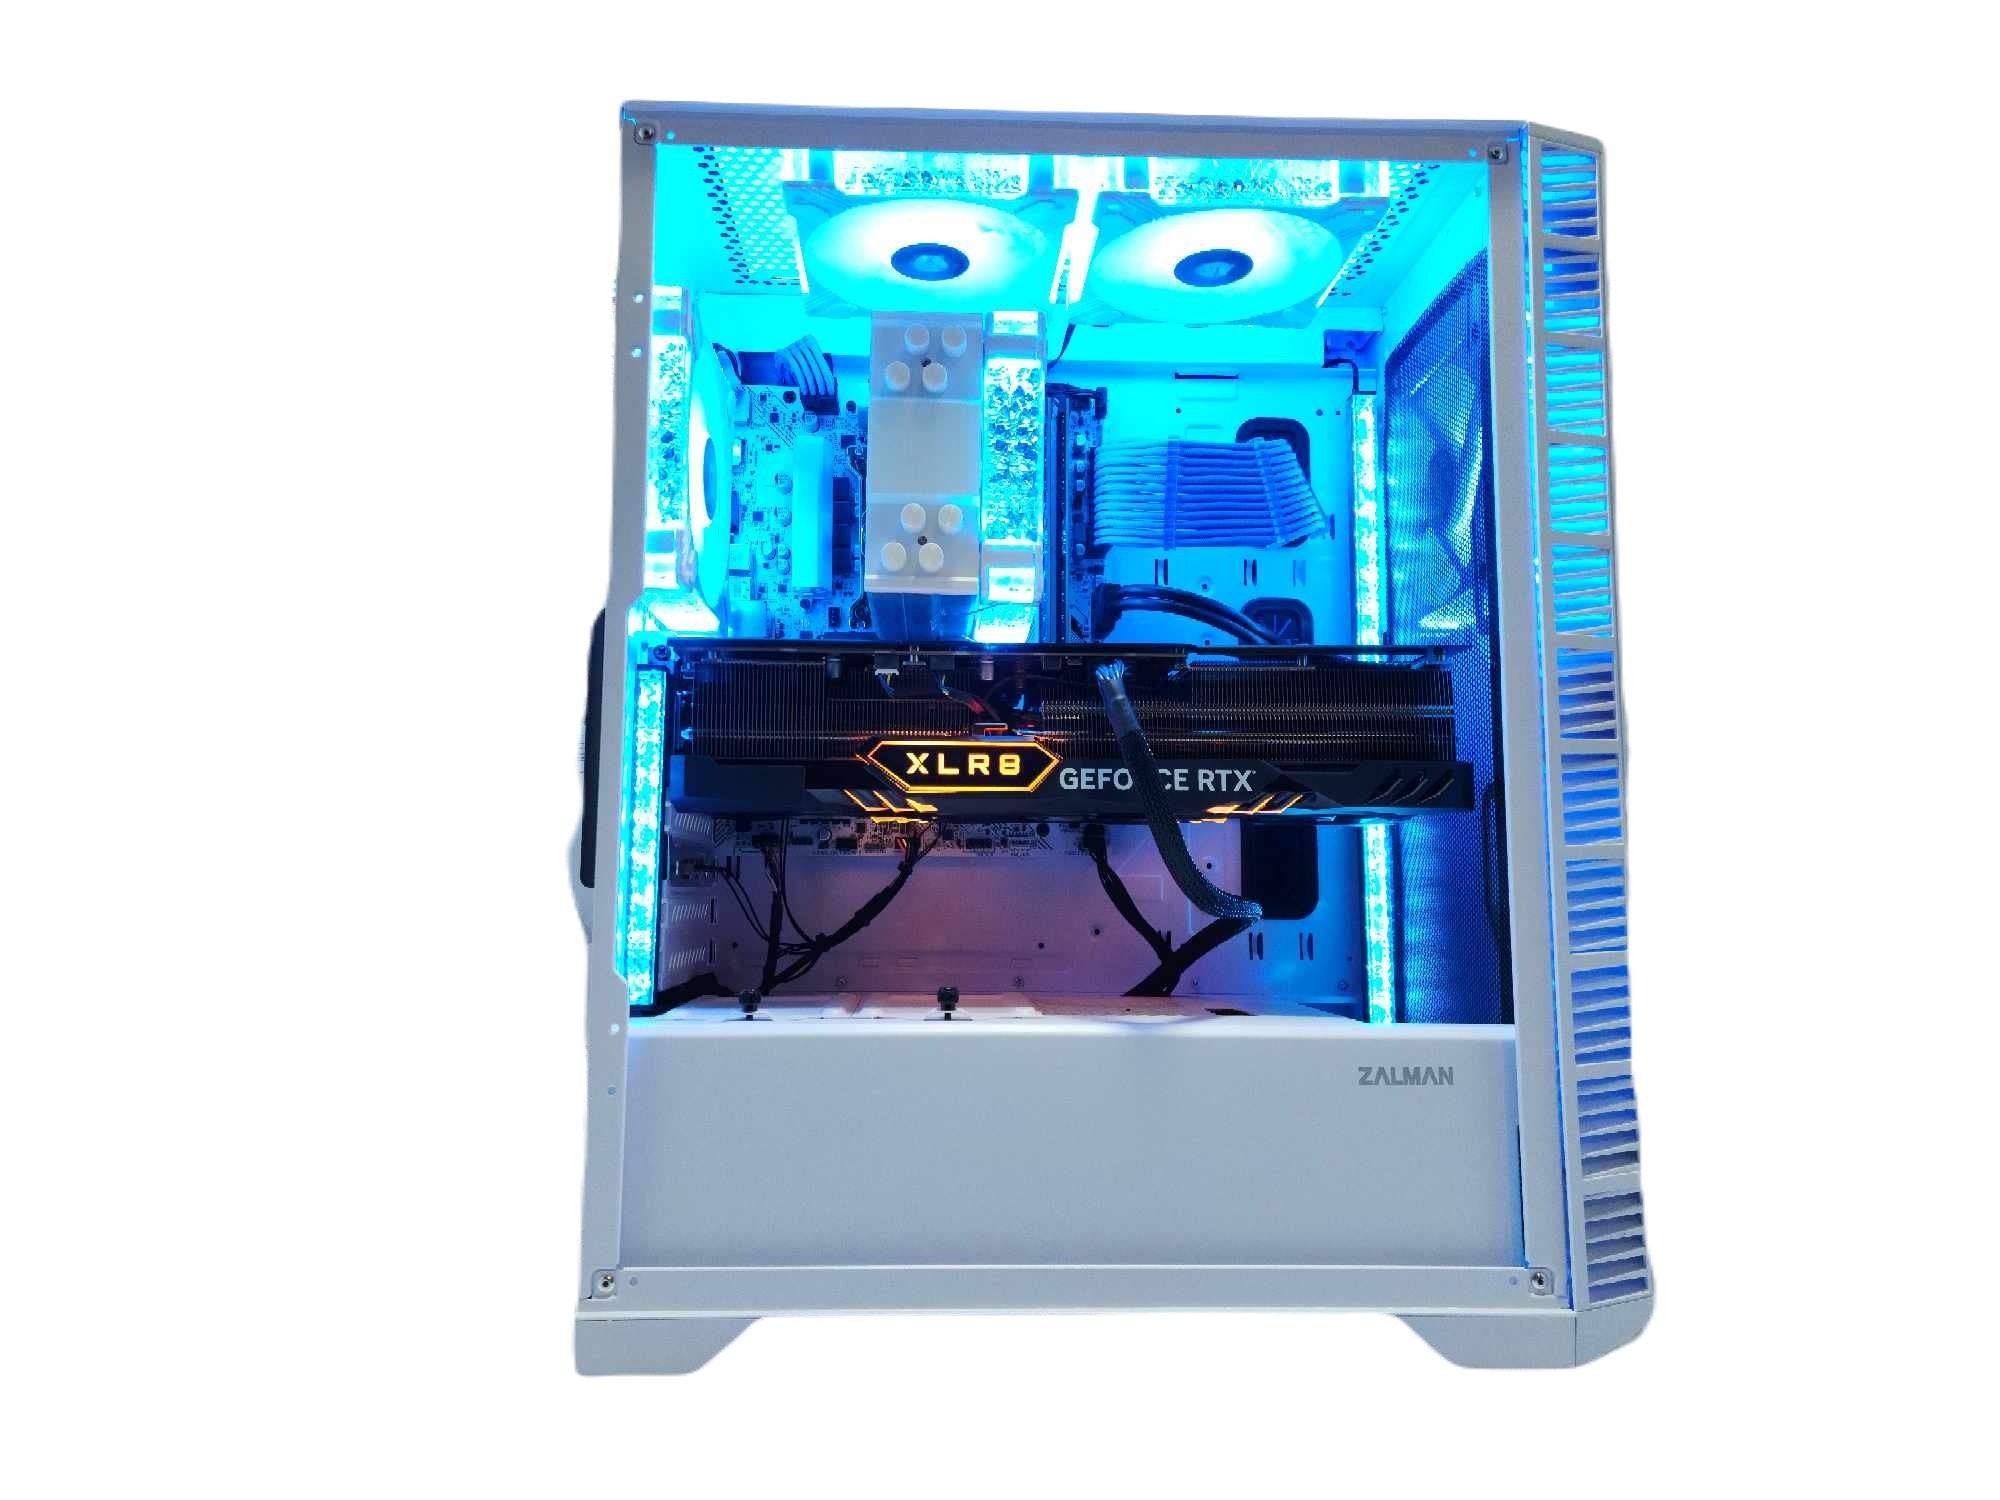 Laufey Core XIII Gaming PC Intel i7 NVIDIA RTX 4080 1TB SSD 64GB DDR5 White RGB B760 - Geek Tech